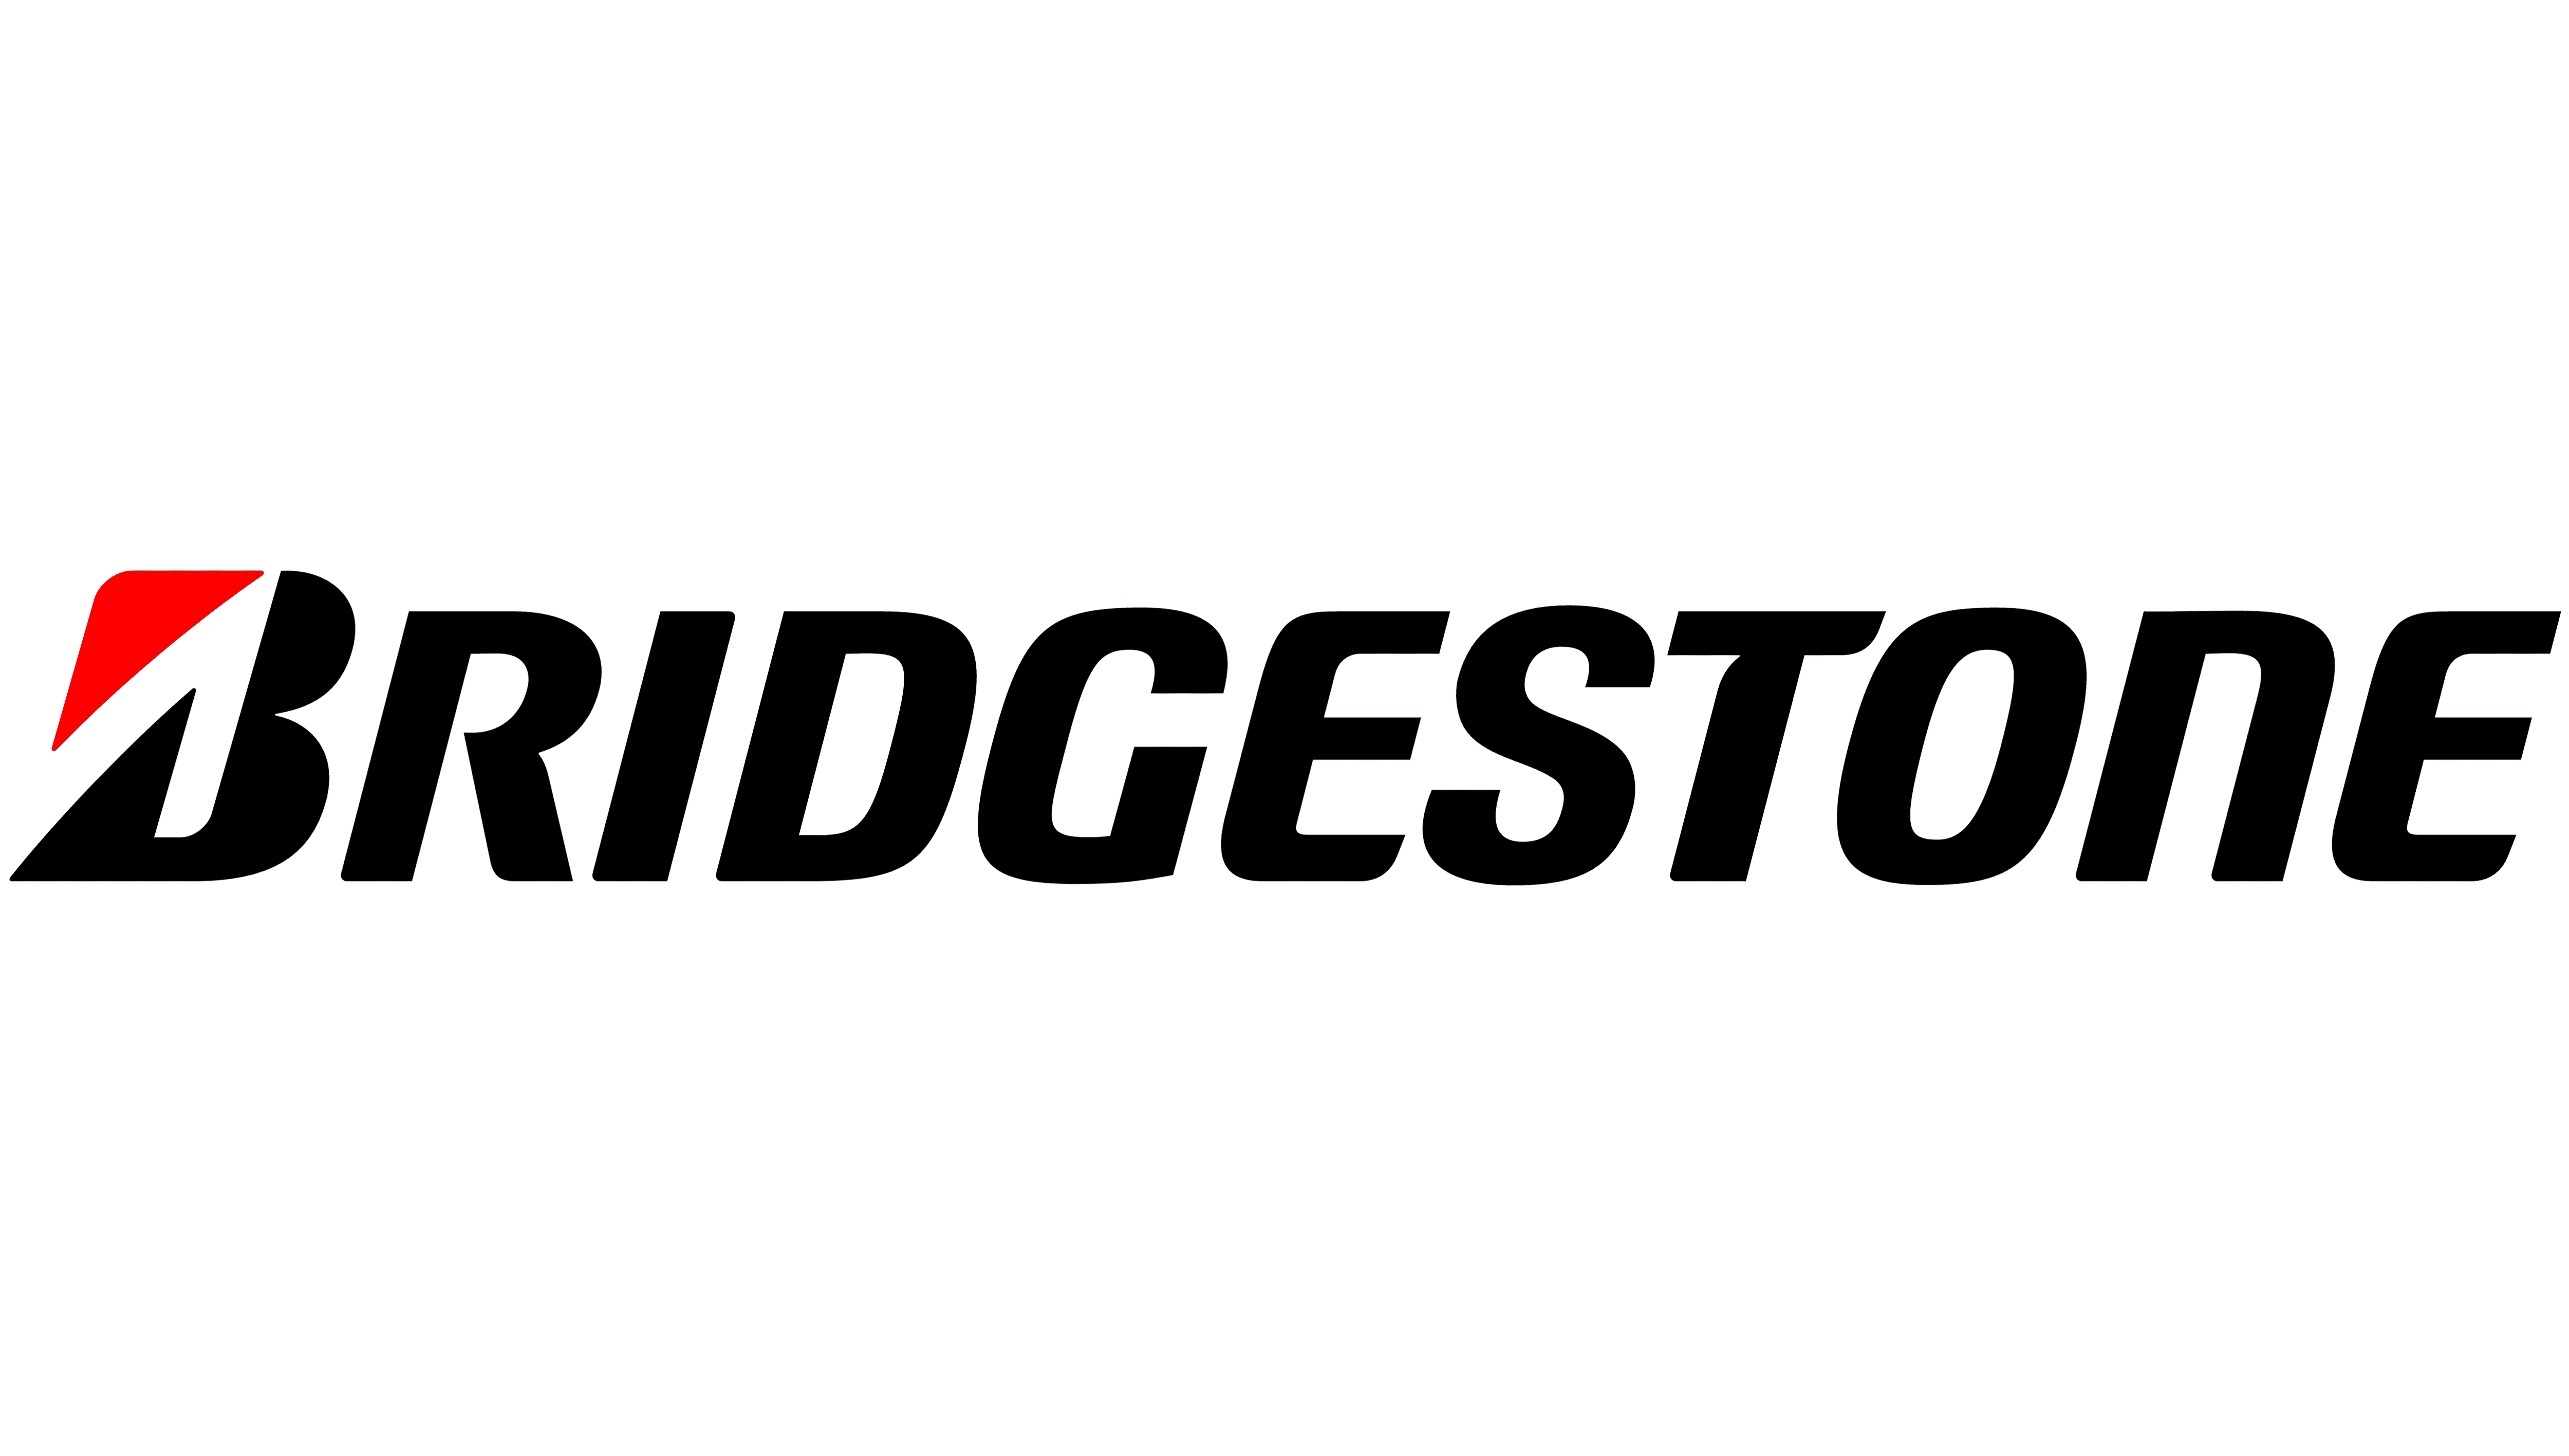 Bridgestone-Logo (1)